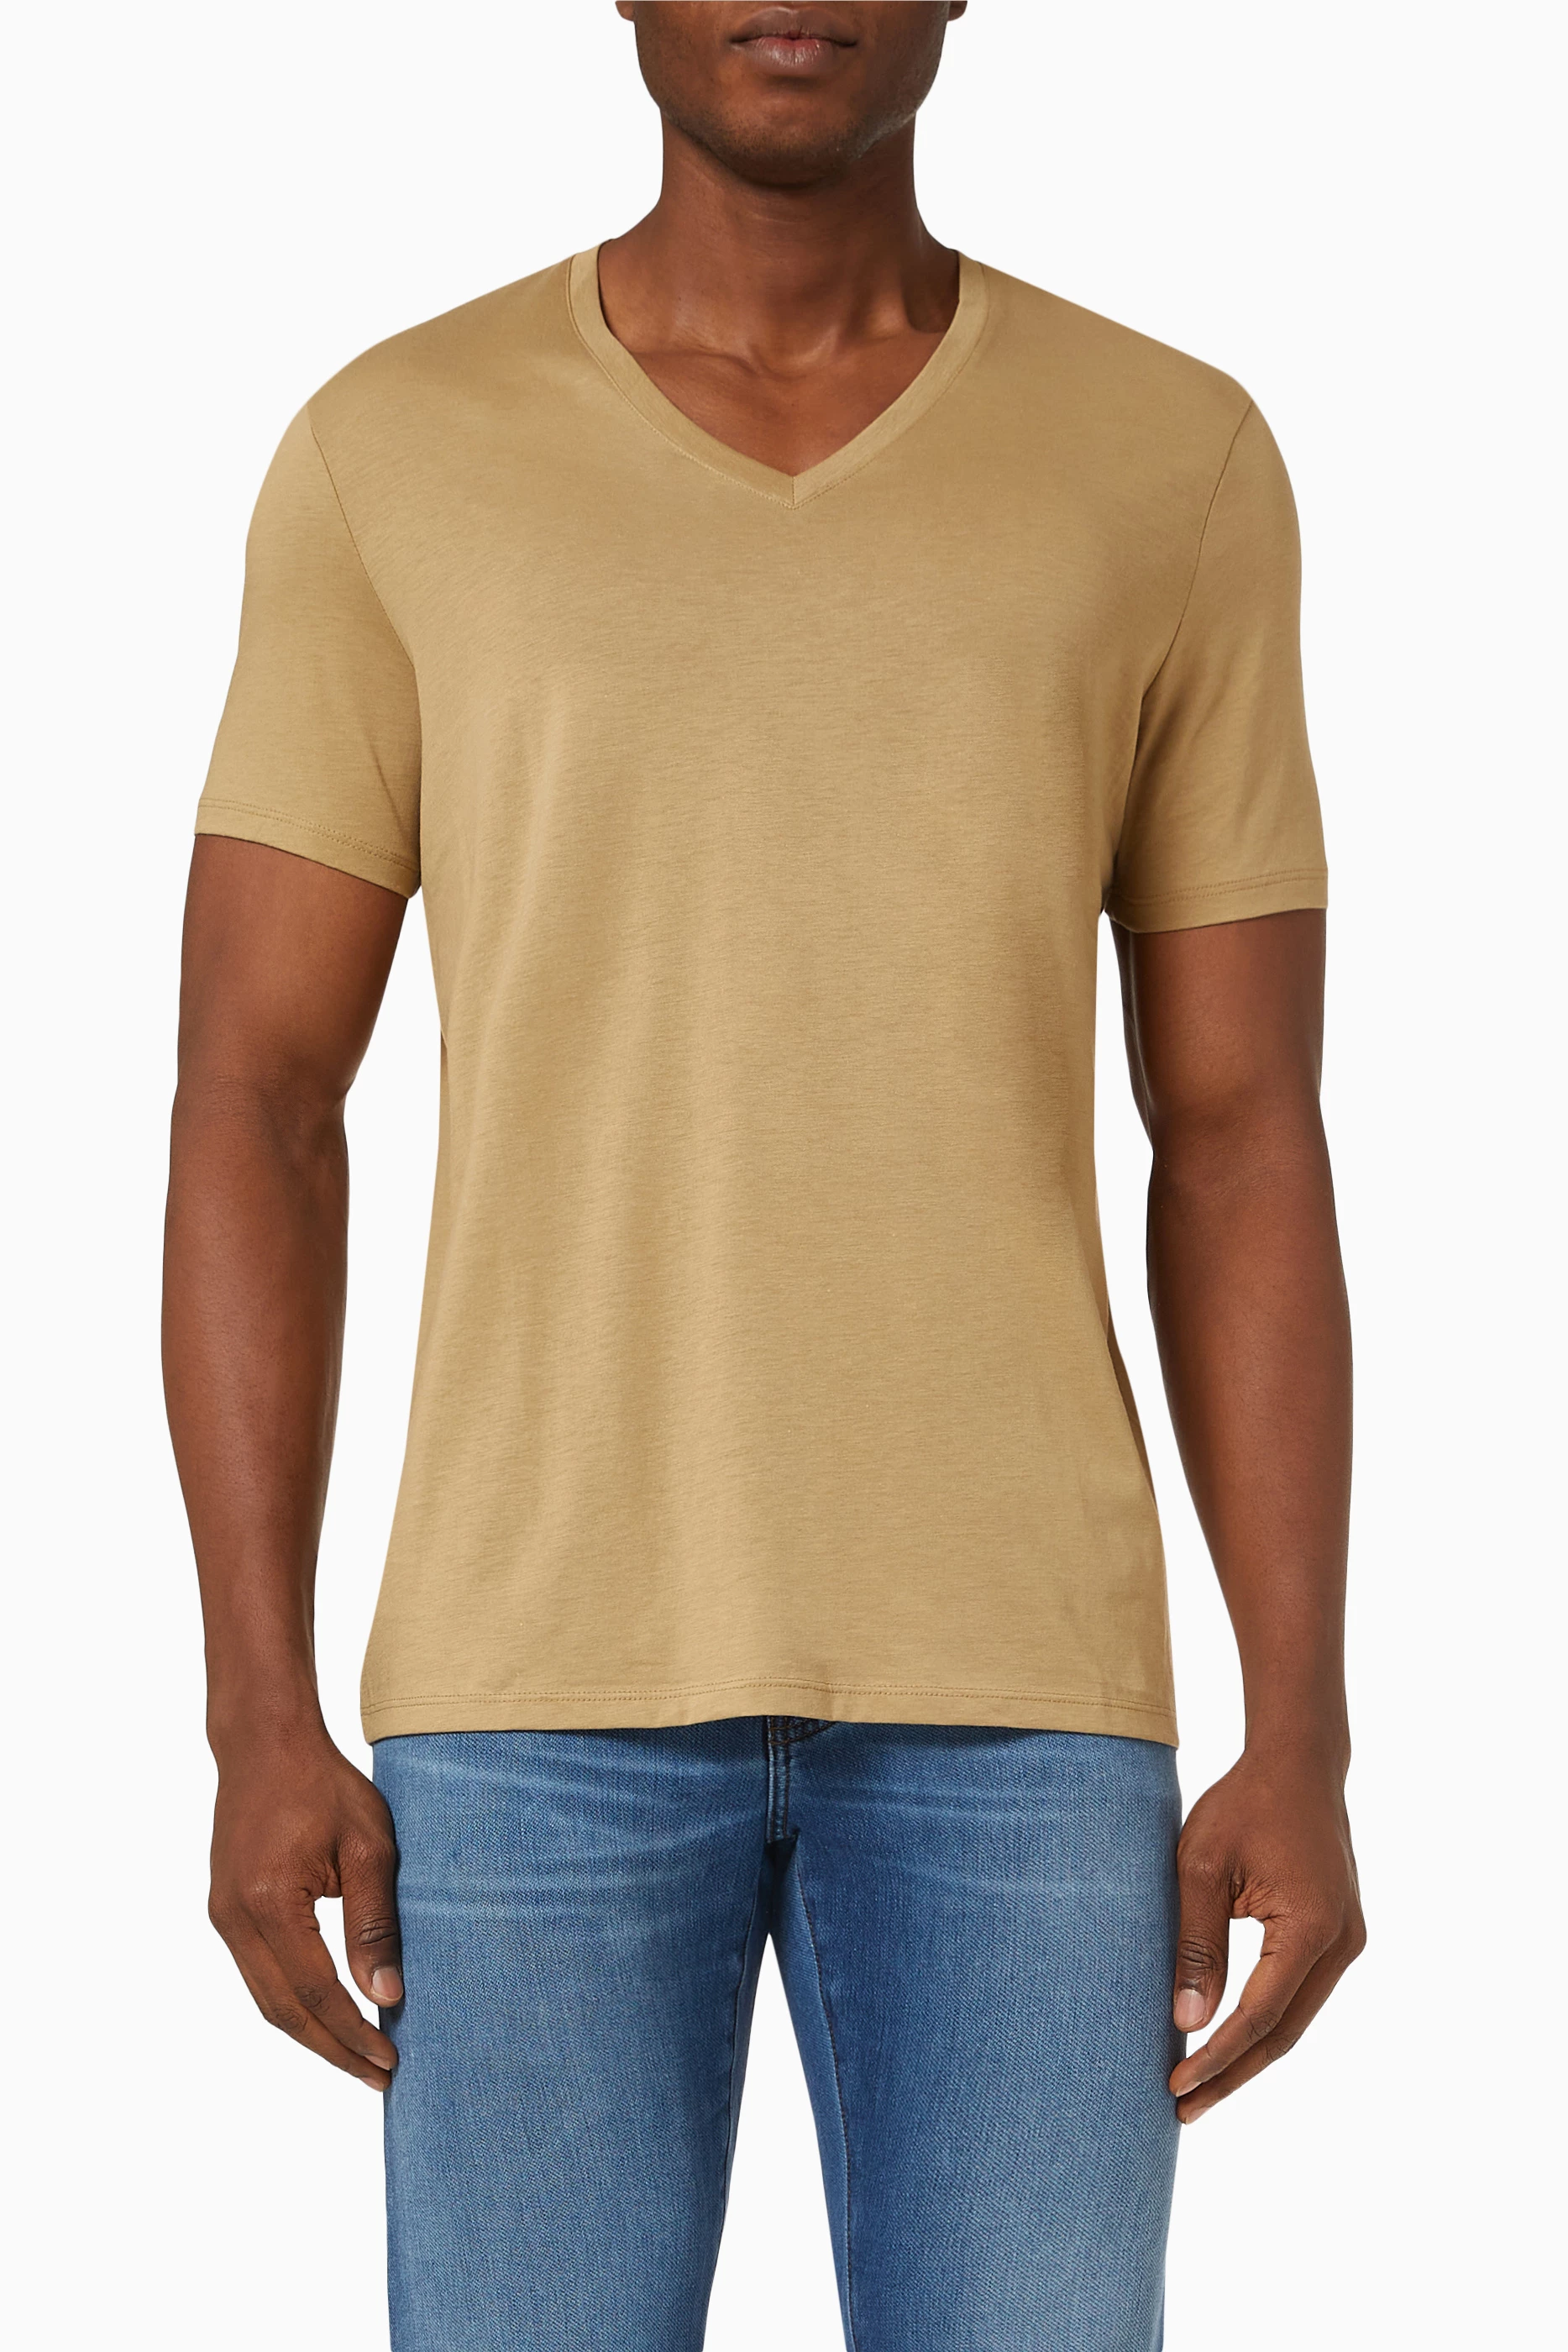 Shop Armani Exchange Neutral V-neck T-shirt in Pima Cotton for MEN | Ounass  Qatar